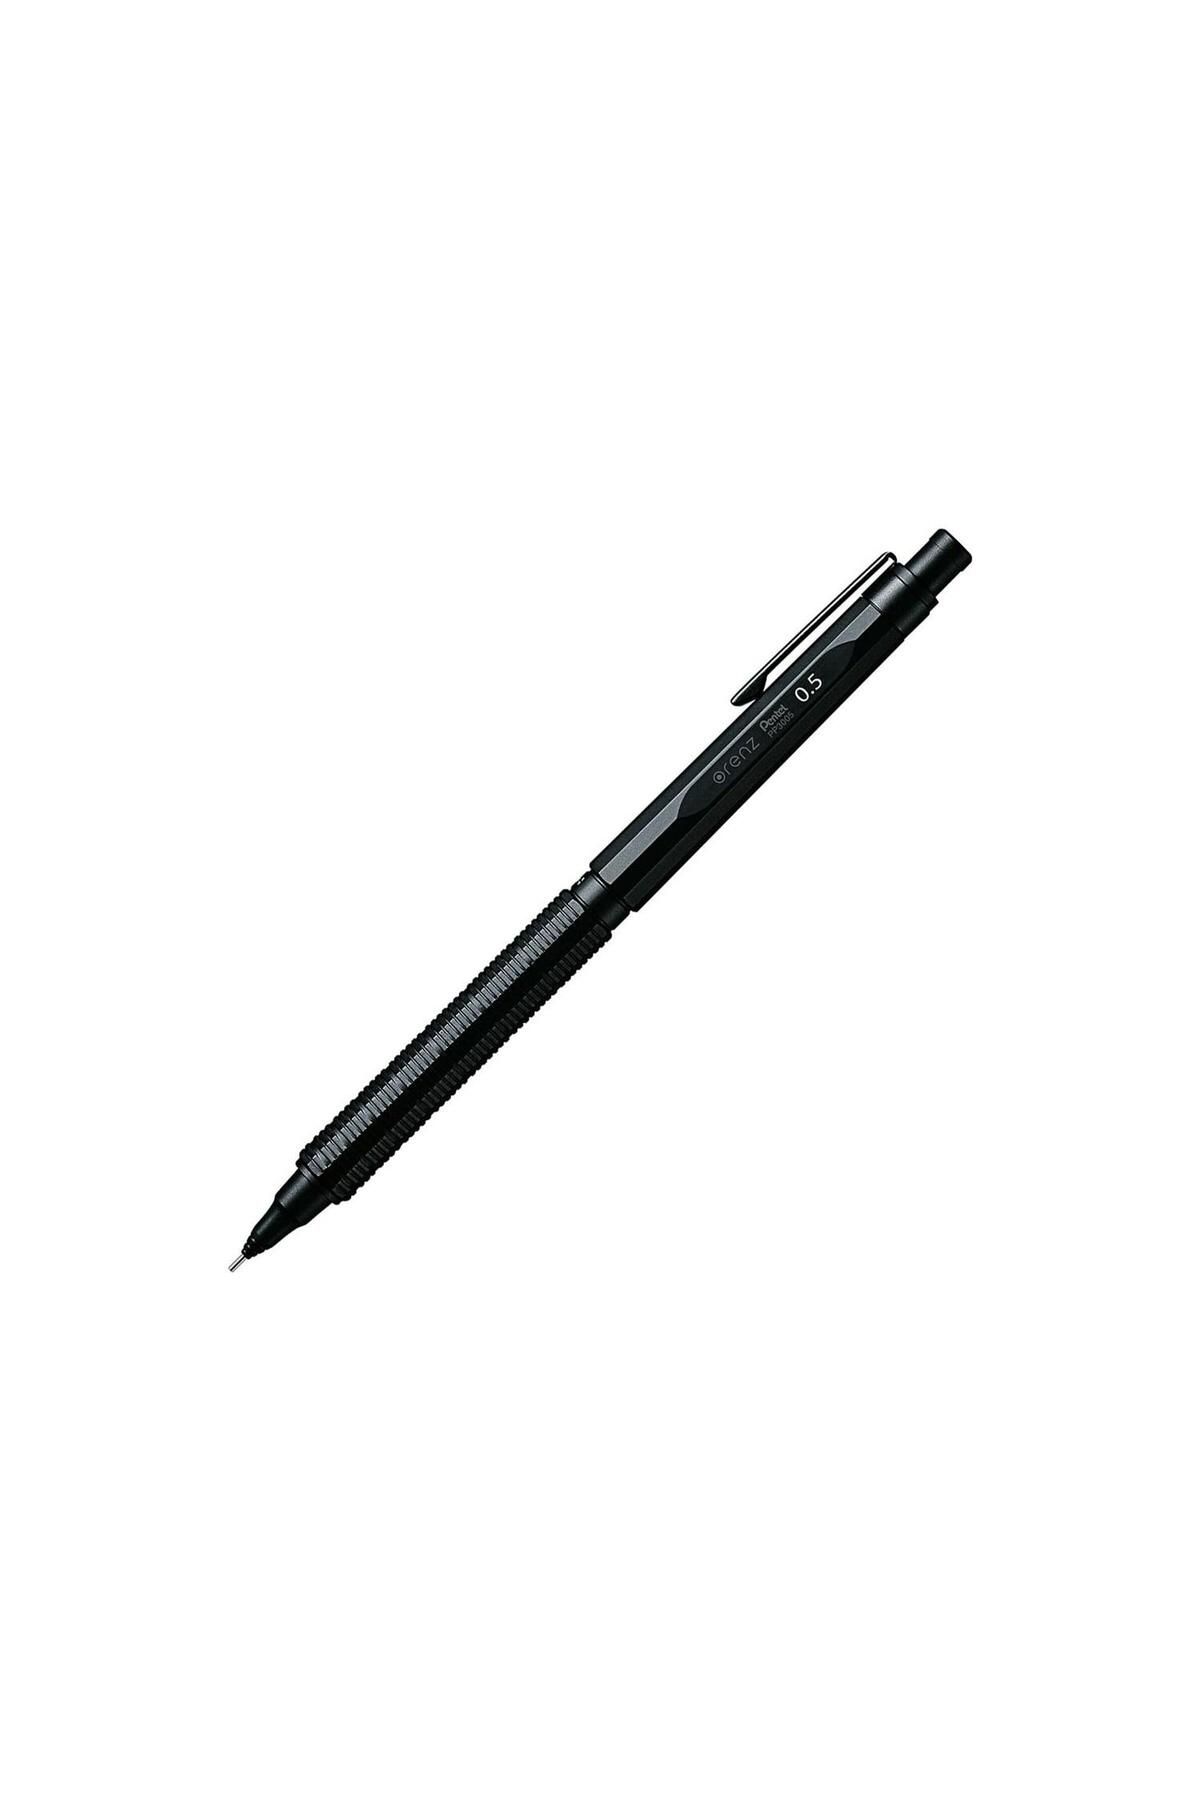 Pentel Çizim Kalemi Mat Karbon Siyah Gövde 0.5 MM Uçlu Kalem